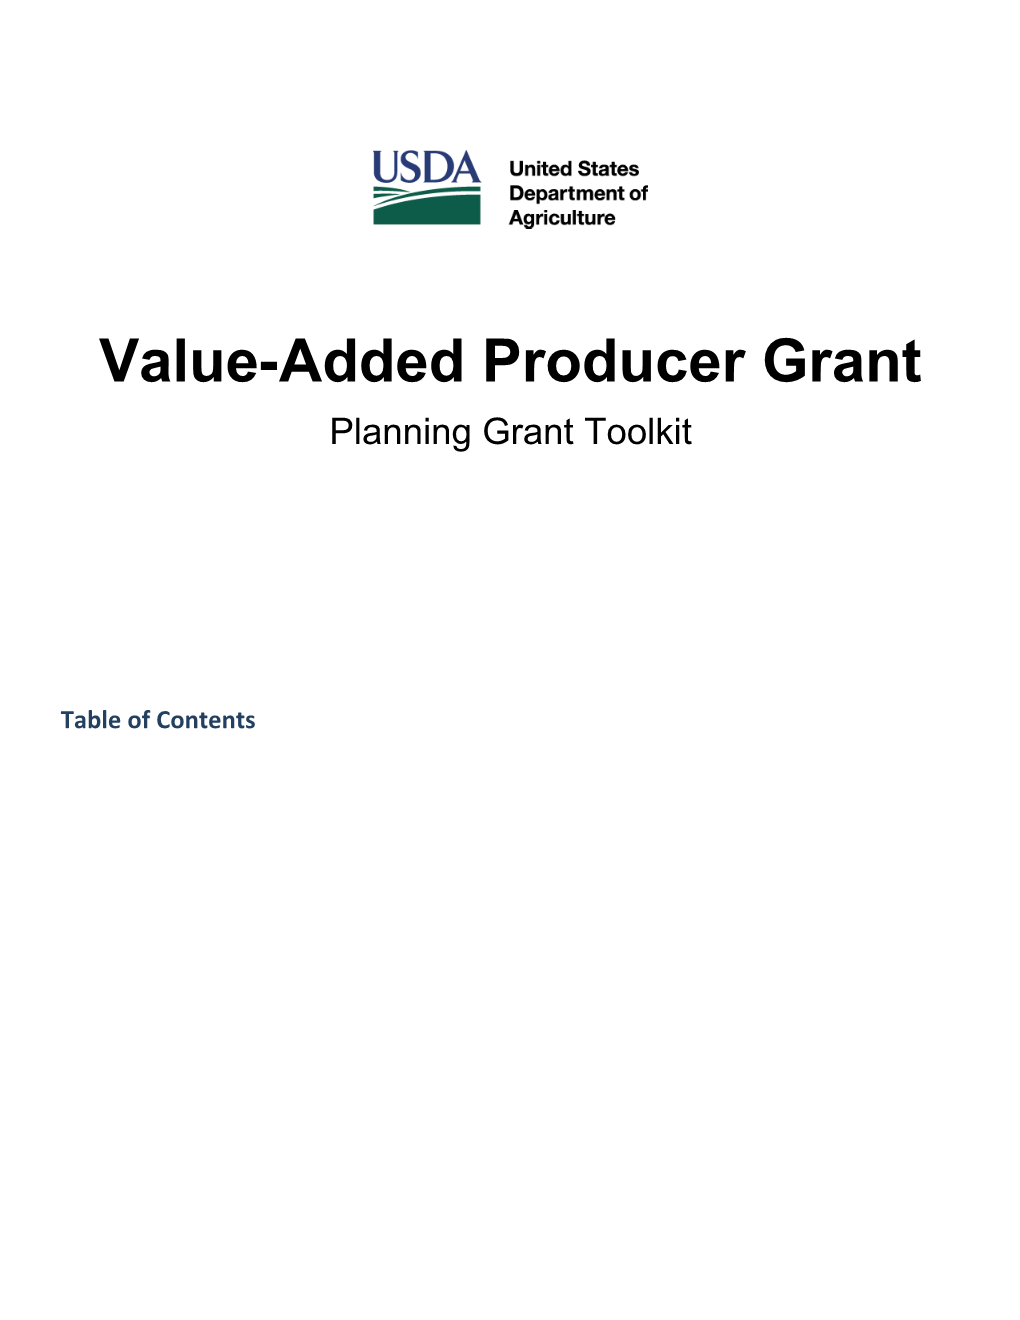 USDA Value-Added Producer Grant